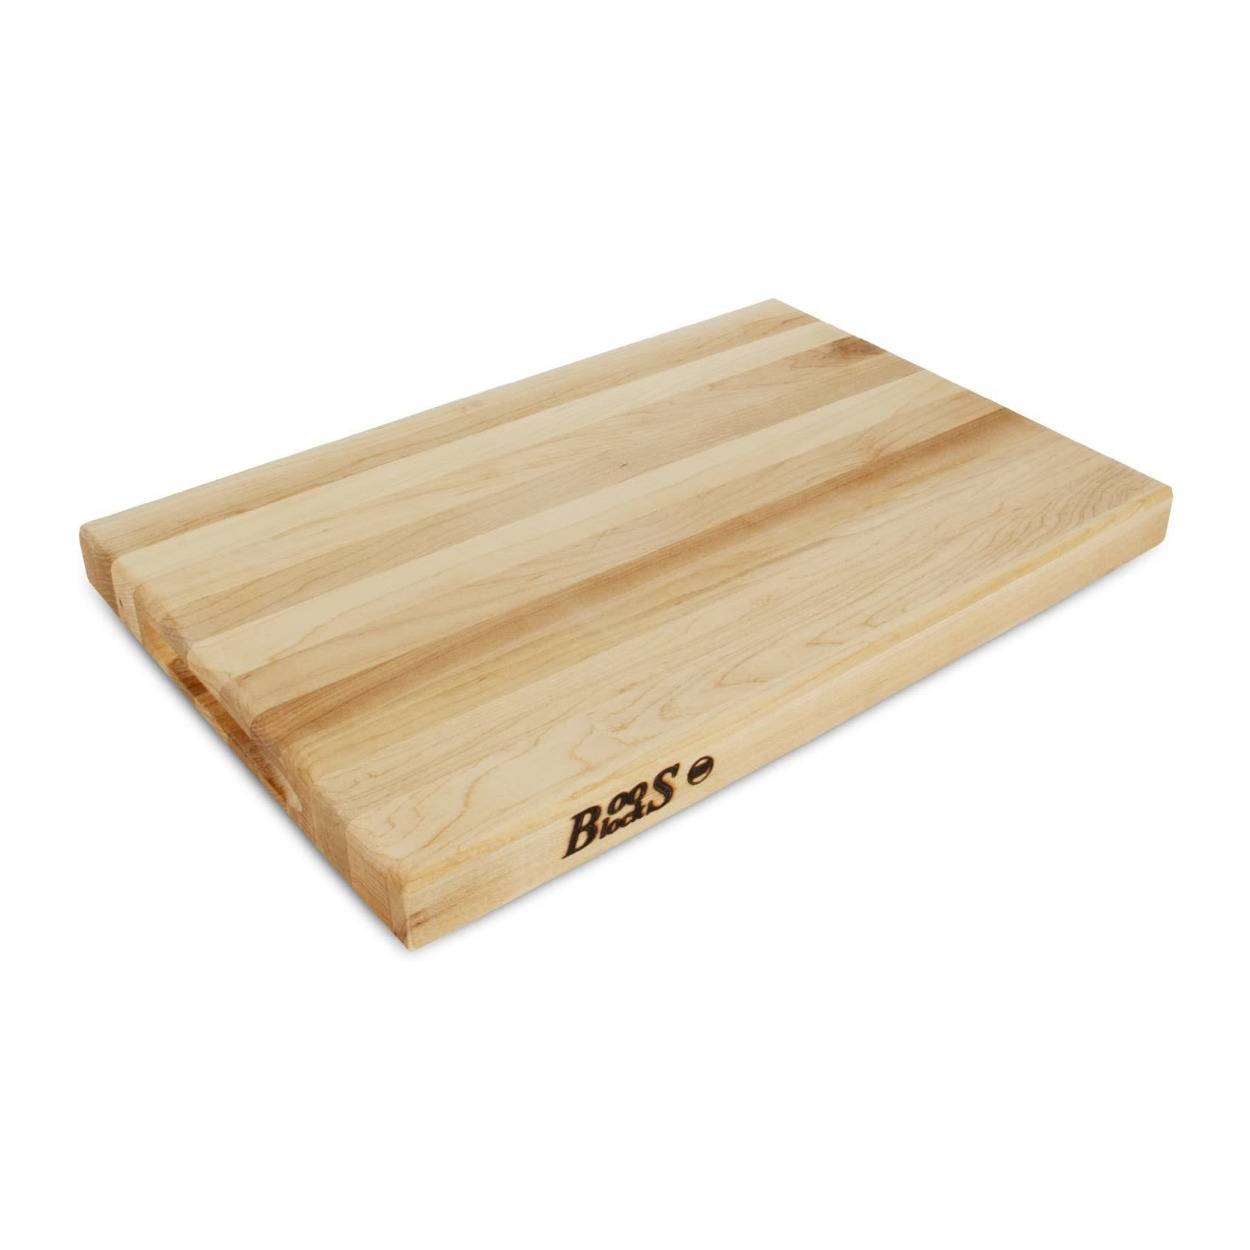 John Boos R01 Maple Wood Edge Grain Reversible Cutting Board (18 x 12 x 1.5 Inches)